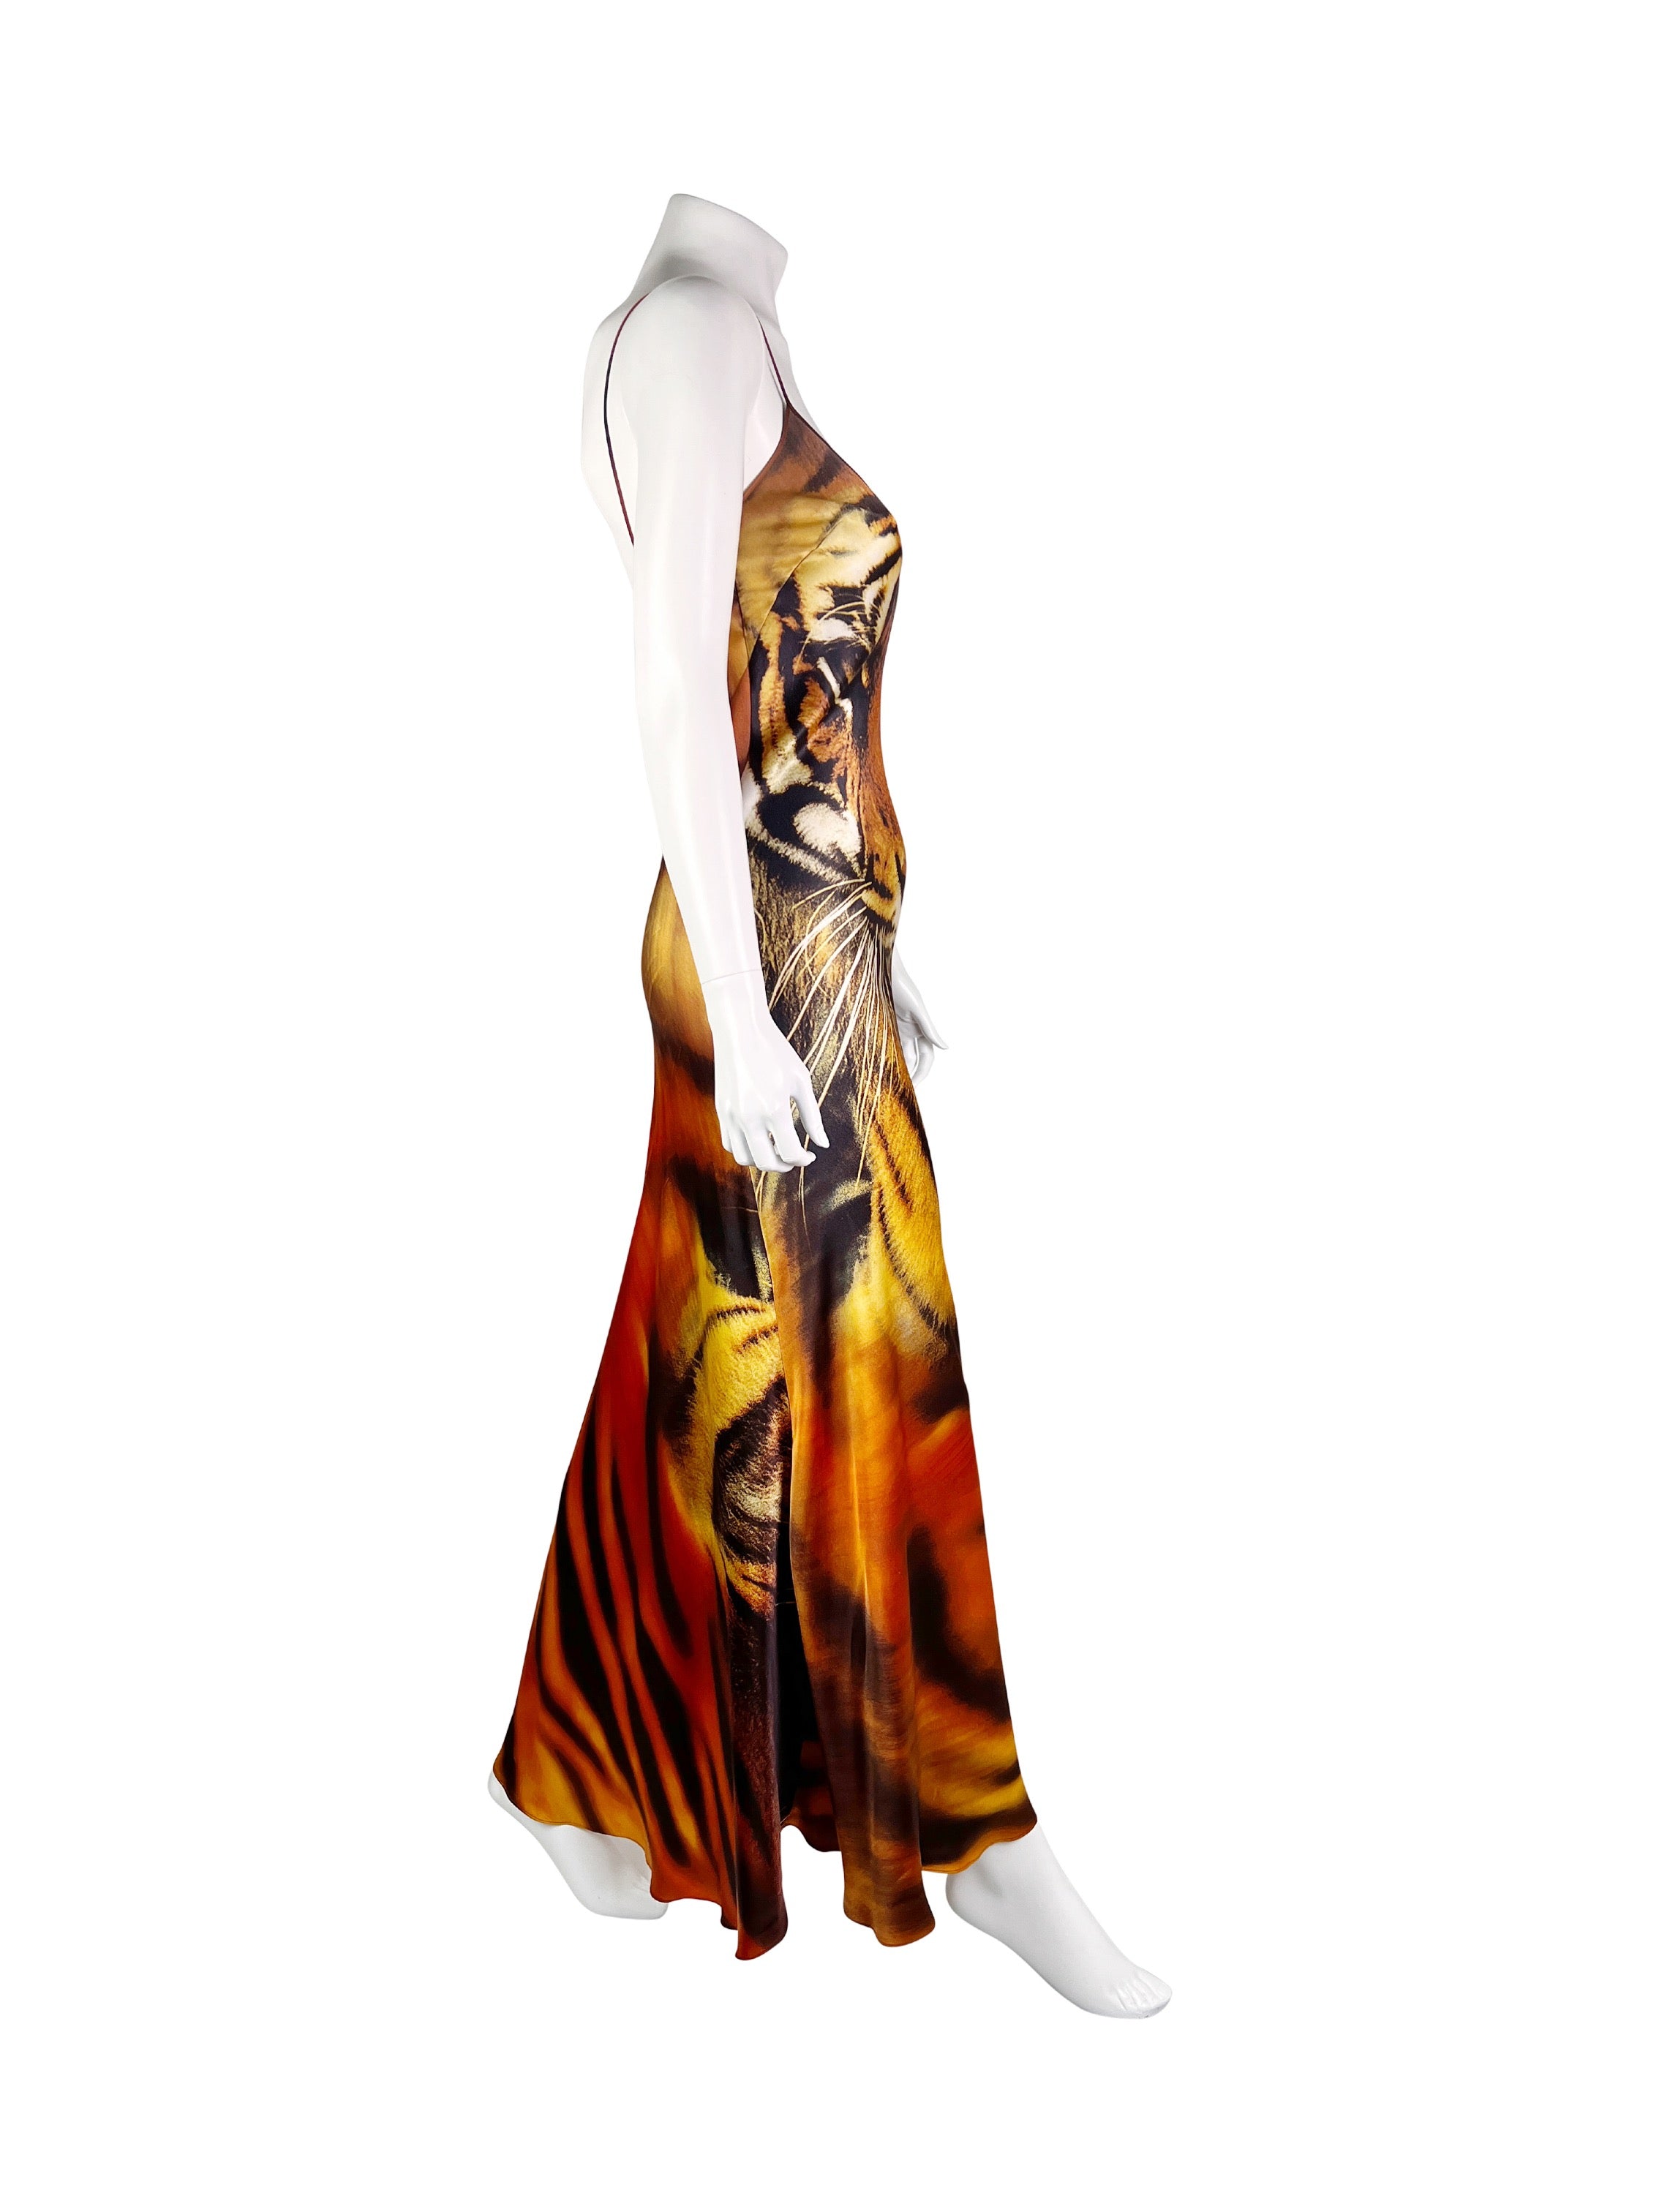 Roberto Cavalli Fall 2000 Tiger Print Silk Gown